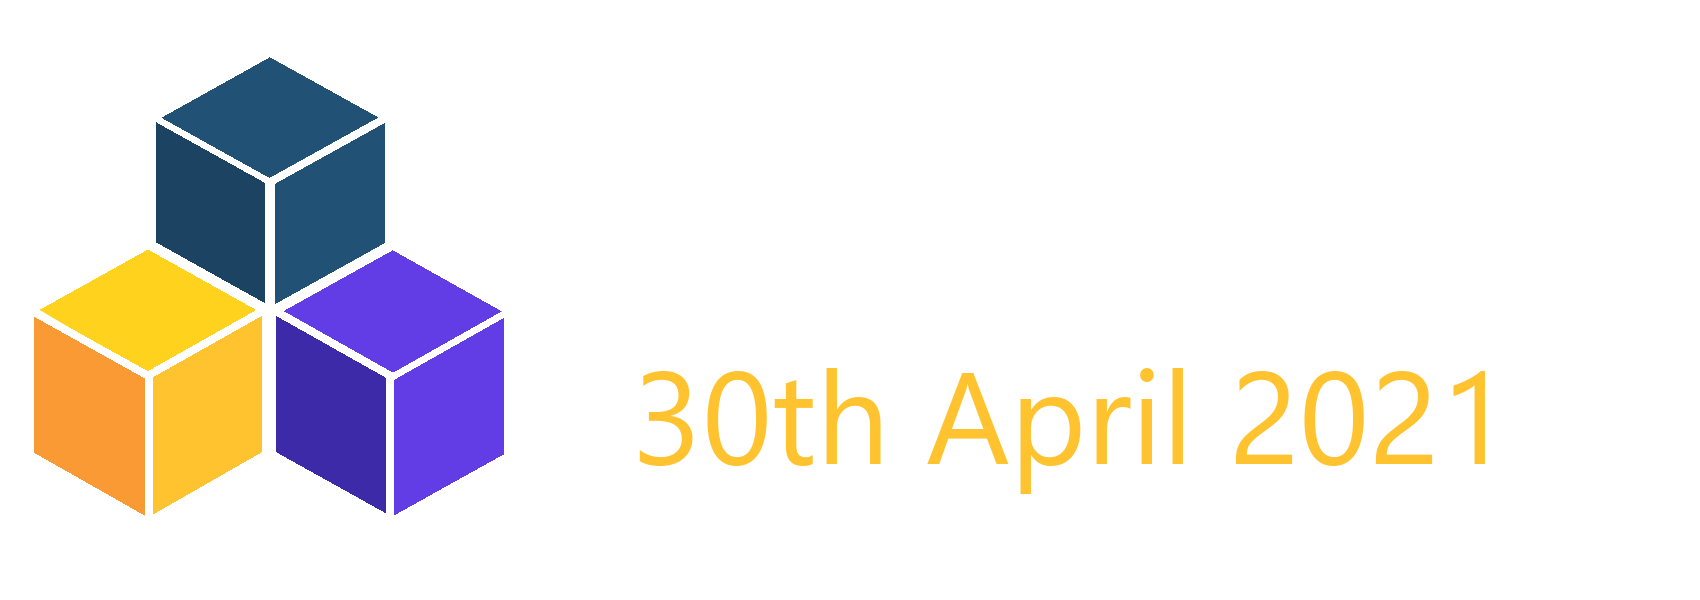 CDK Day - 30th April 2021